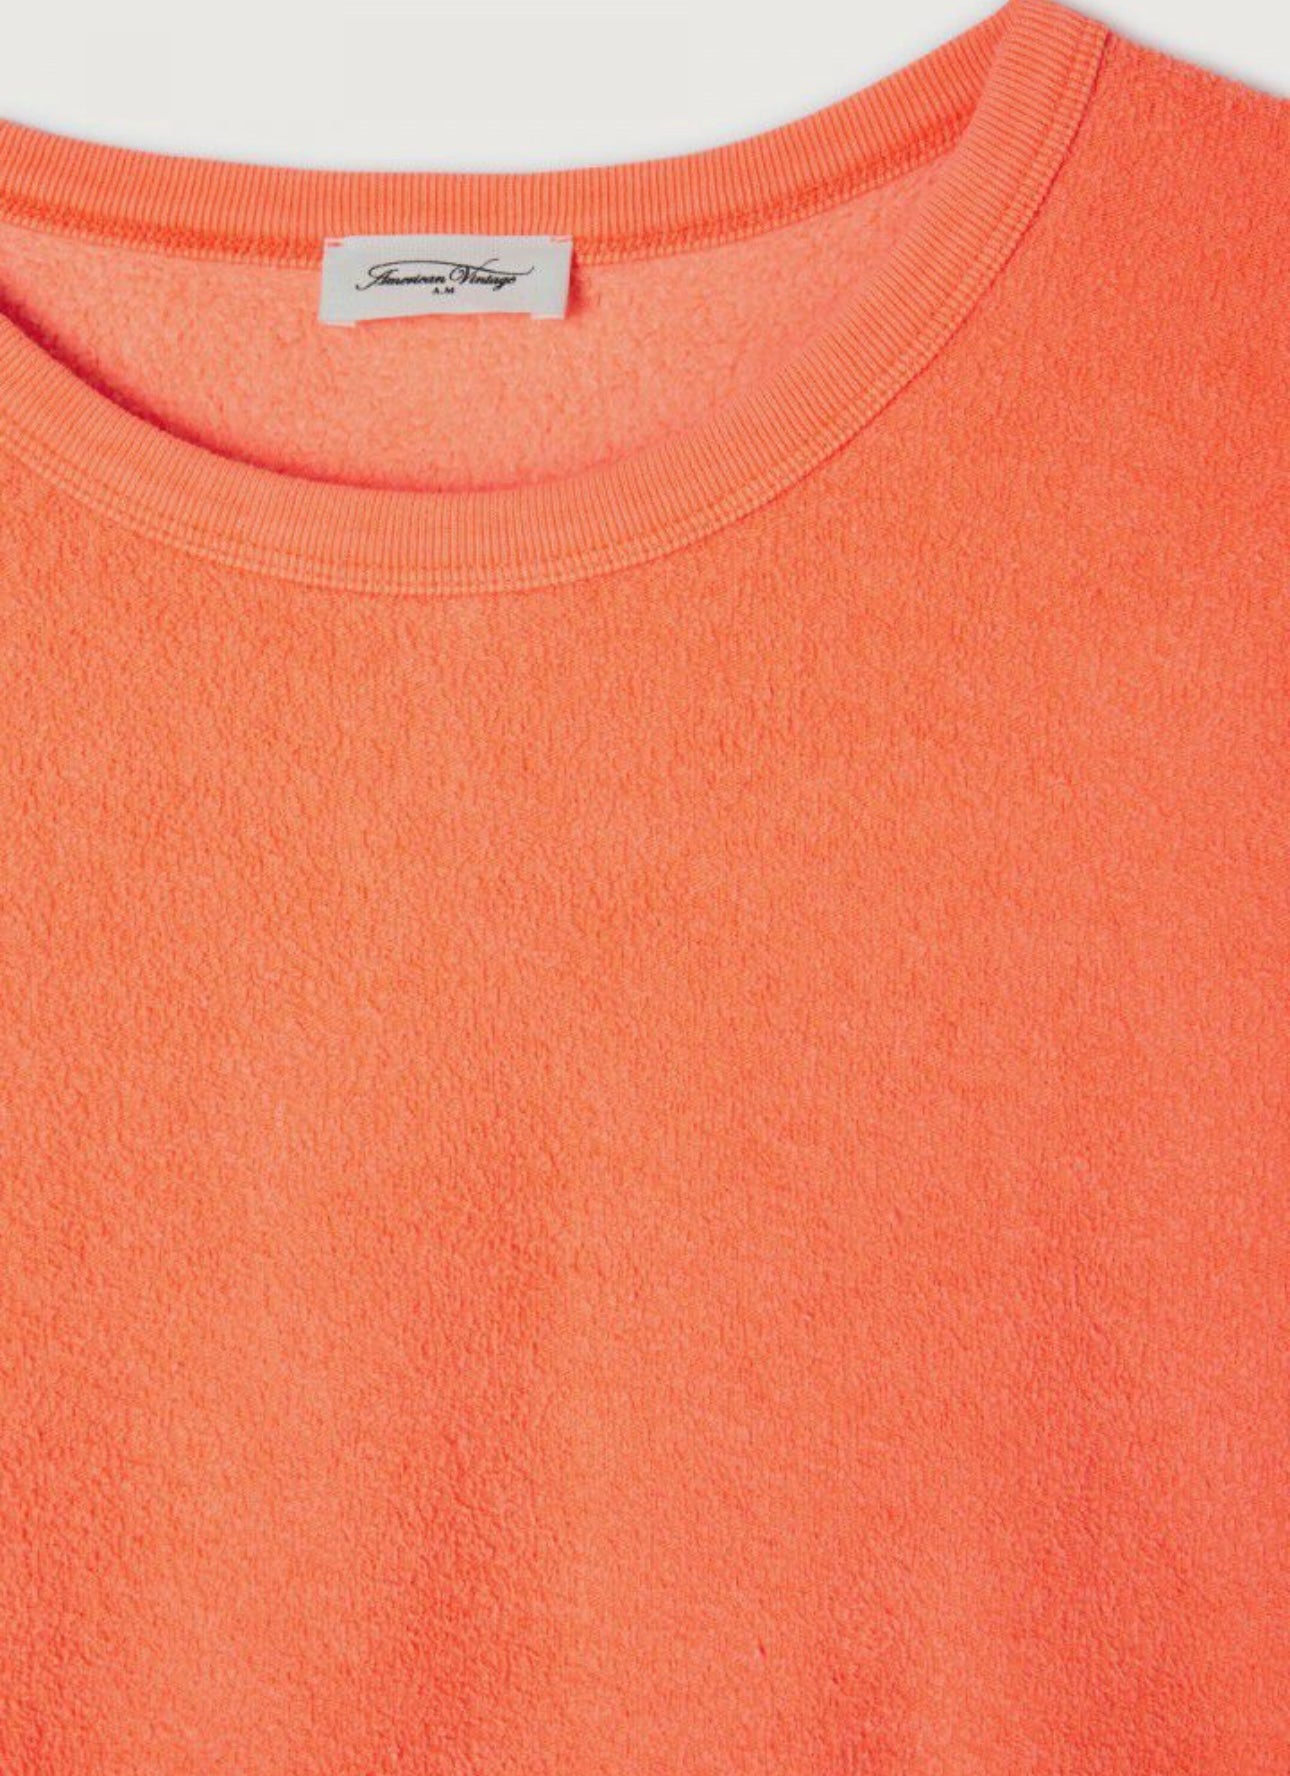 American Vintage Sweatshirt Bobypark Orange